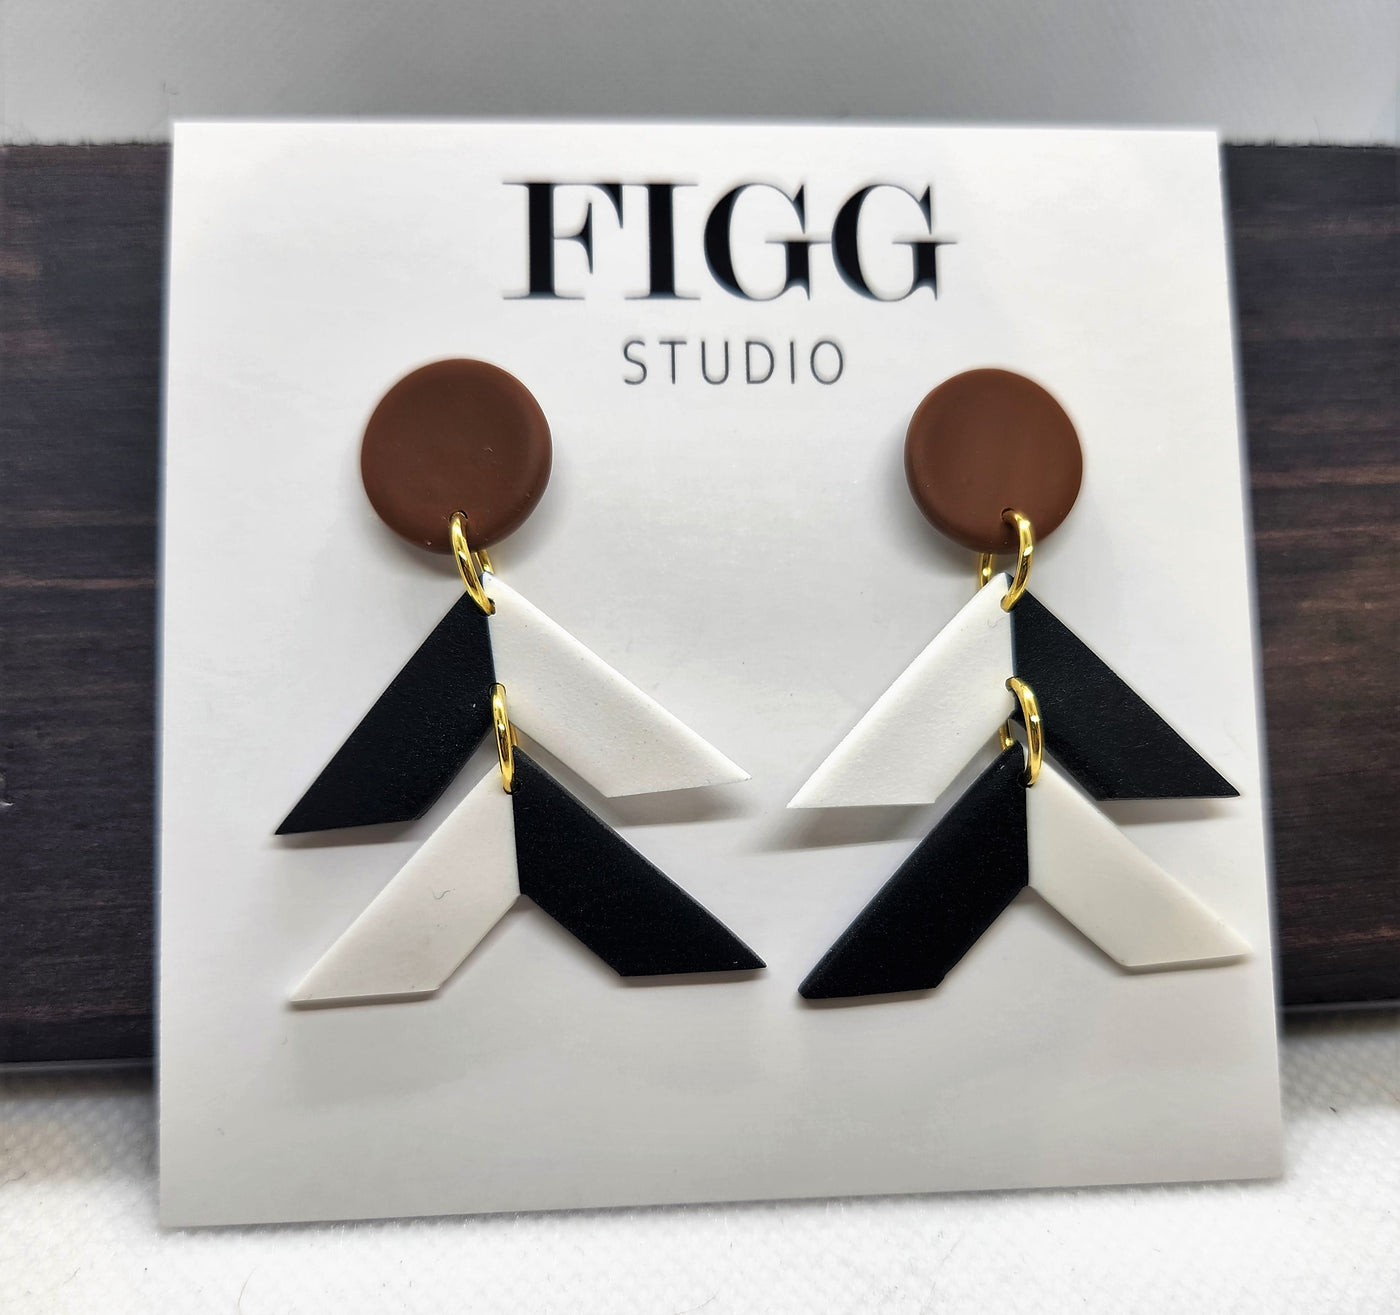 Chevron Sun Earrings by Figg Studio